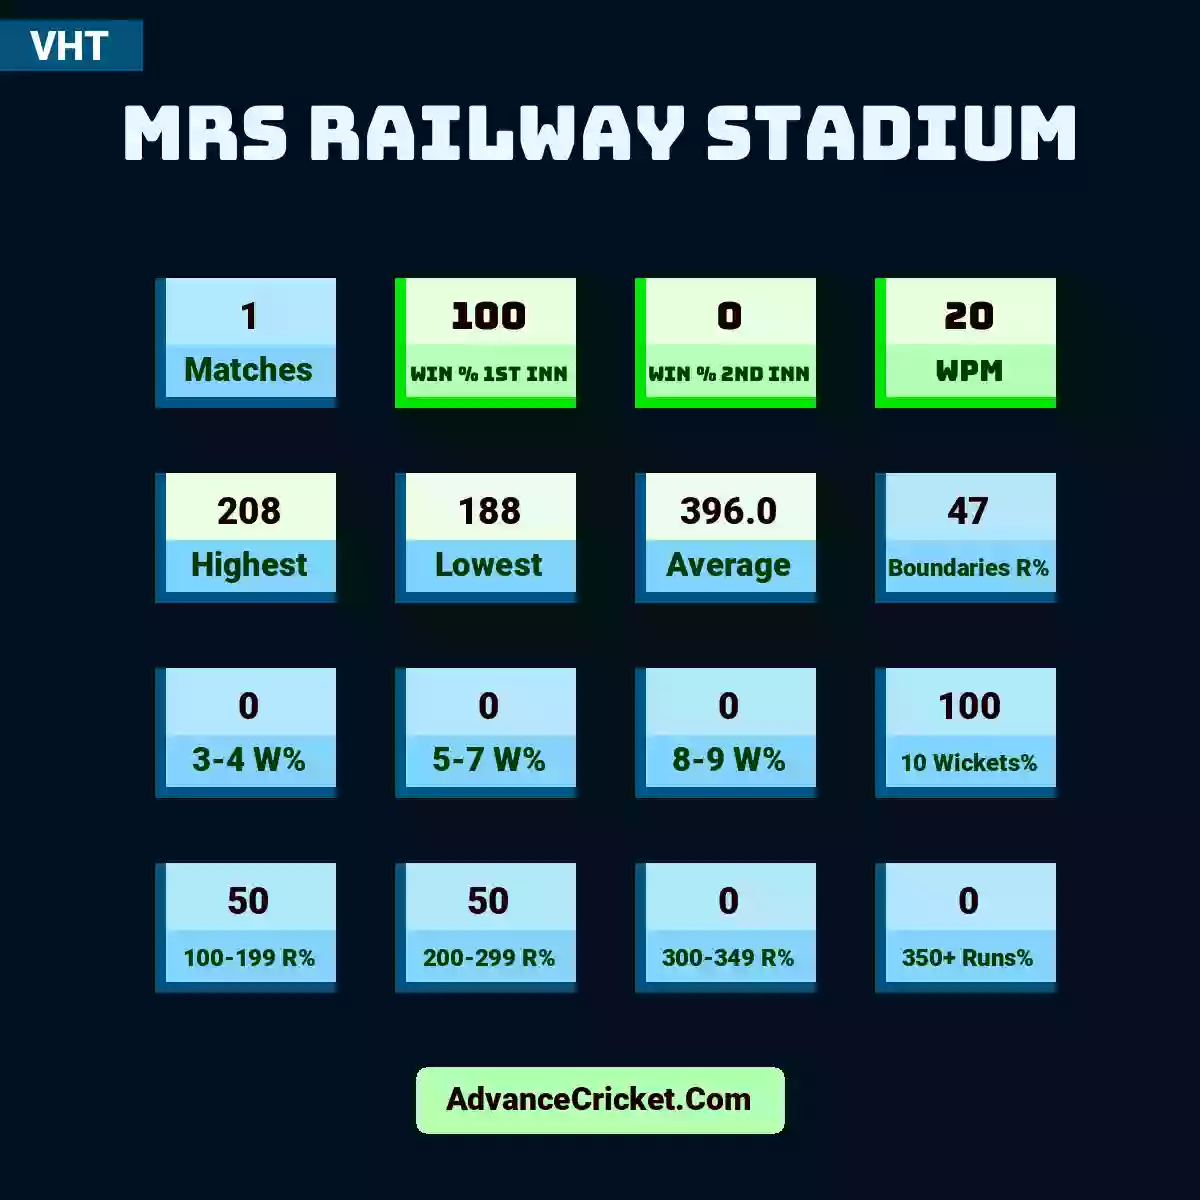 Image showing MRS Railway Stadium with Matches: 1, Win % 1st Inn: 100, Win % 2nd Inn: 0, WPM: 20, Highest: 208, Lowest: 188, Average: 396.0, Boundaries R%: 47, 3-4 W%: 0, 5-7 W%: 0, 8-9 W%: 0, 10 Wickets%: 100, 100-199 R%: 50, 200-299 R%: 50, 300-349 R%: 0, 350+ Runs%: 0.